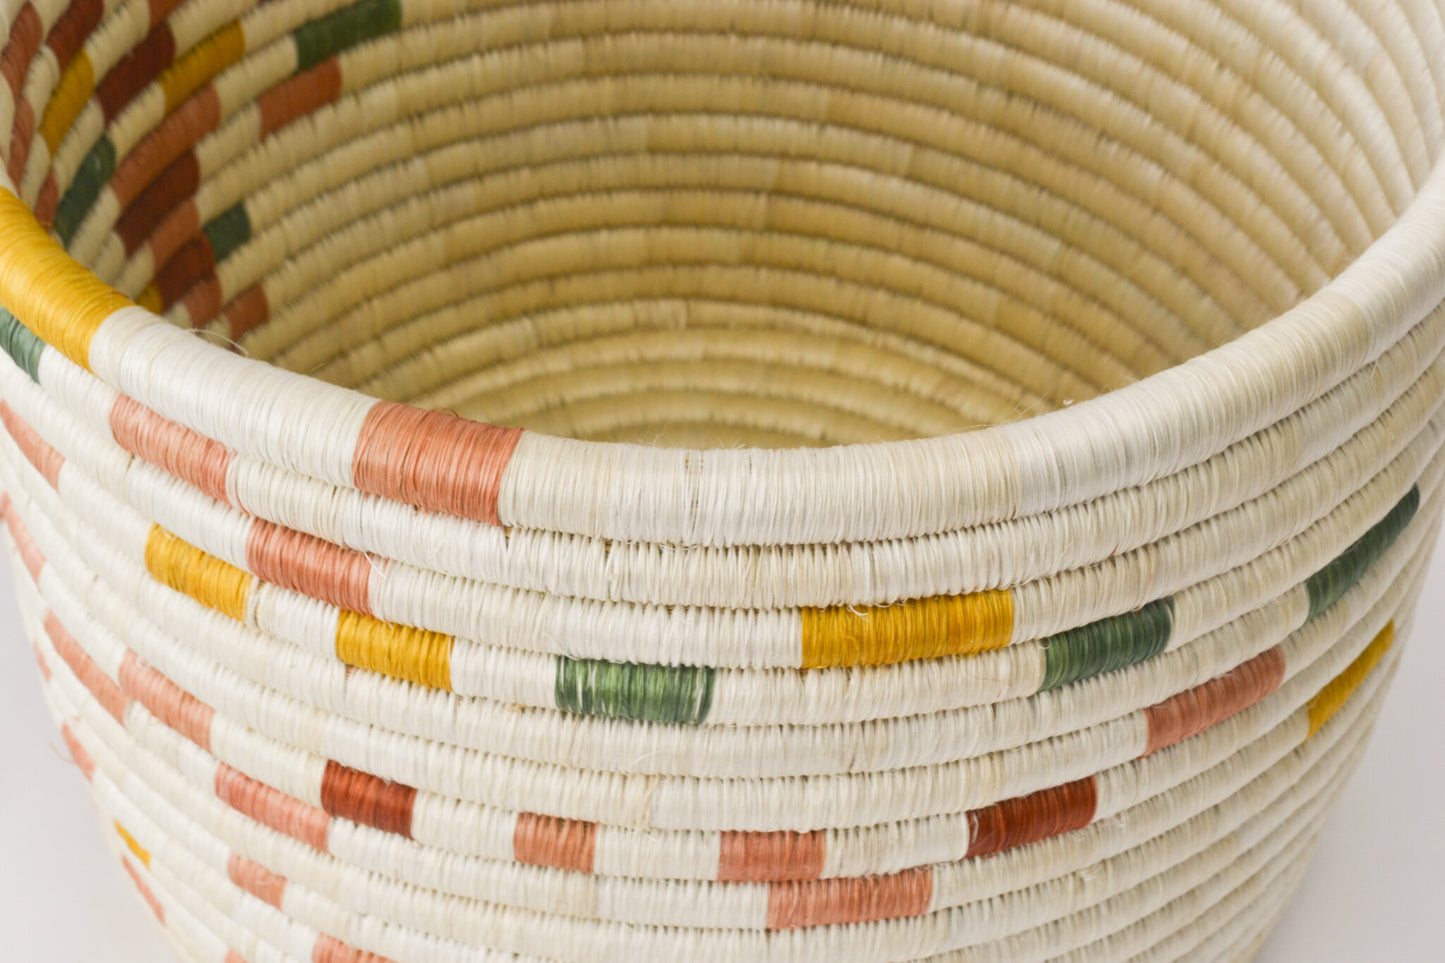 Guacamaya Tabletop Baskets (3 sizes)